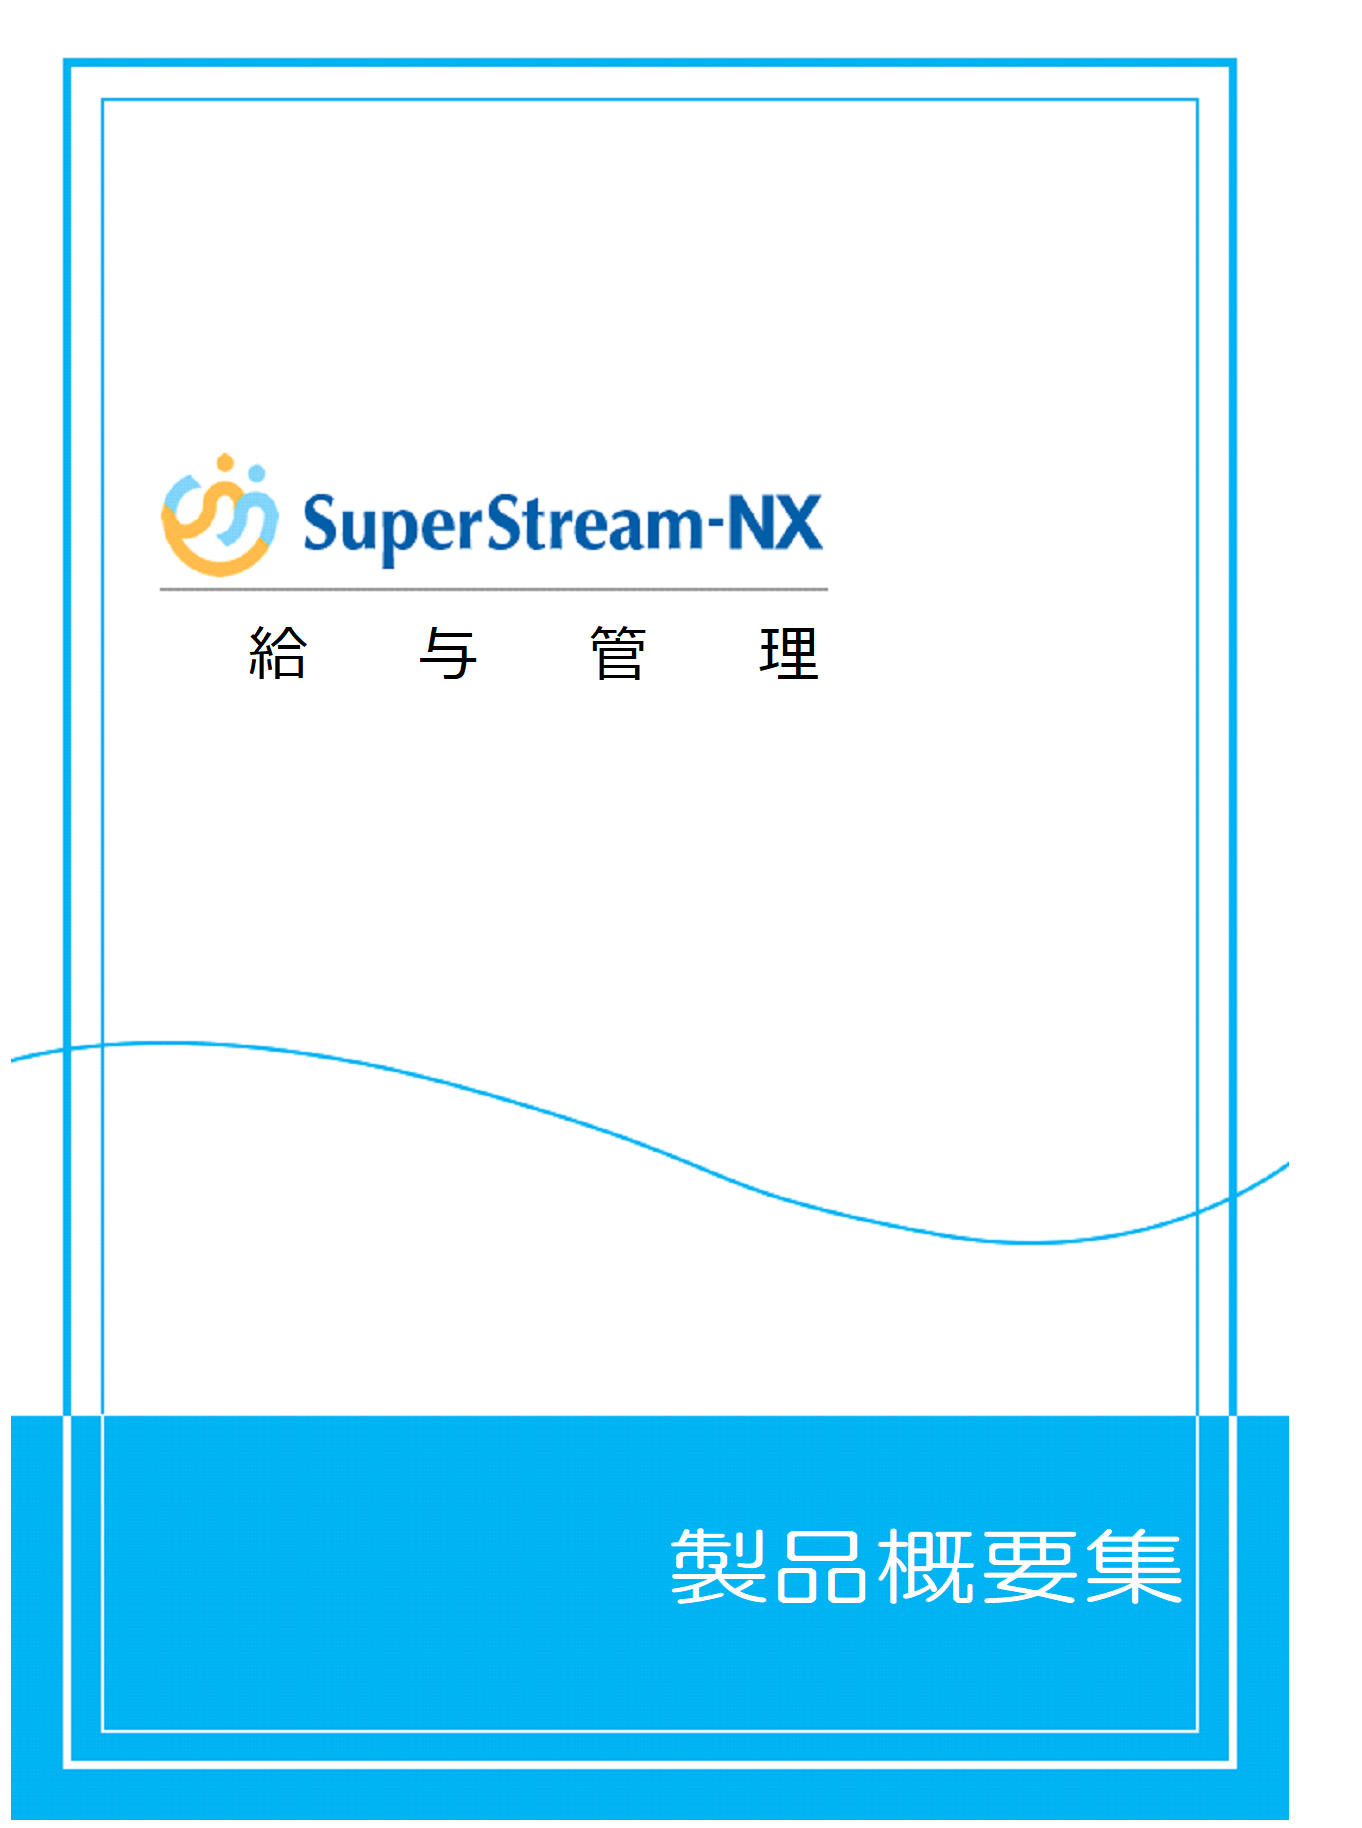 SuperStream-NX 給与管理製品概要集